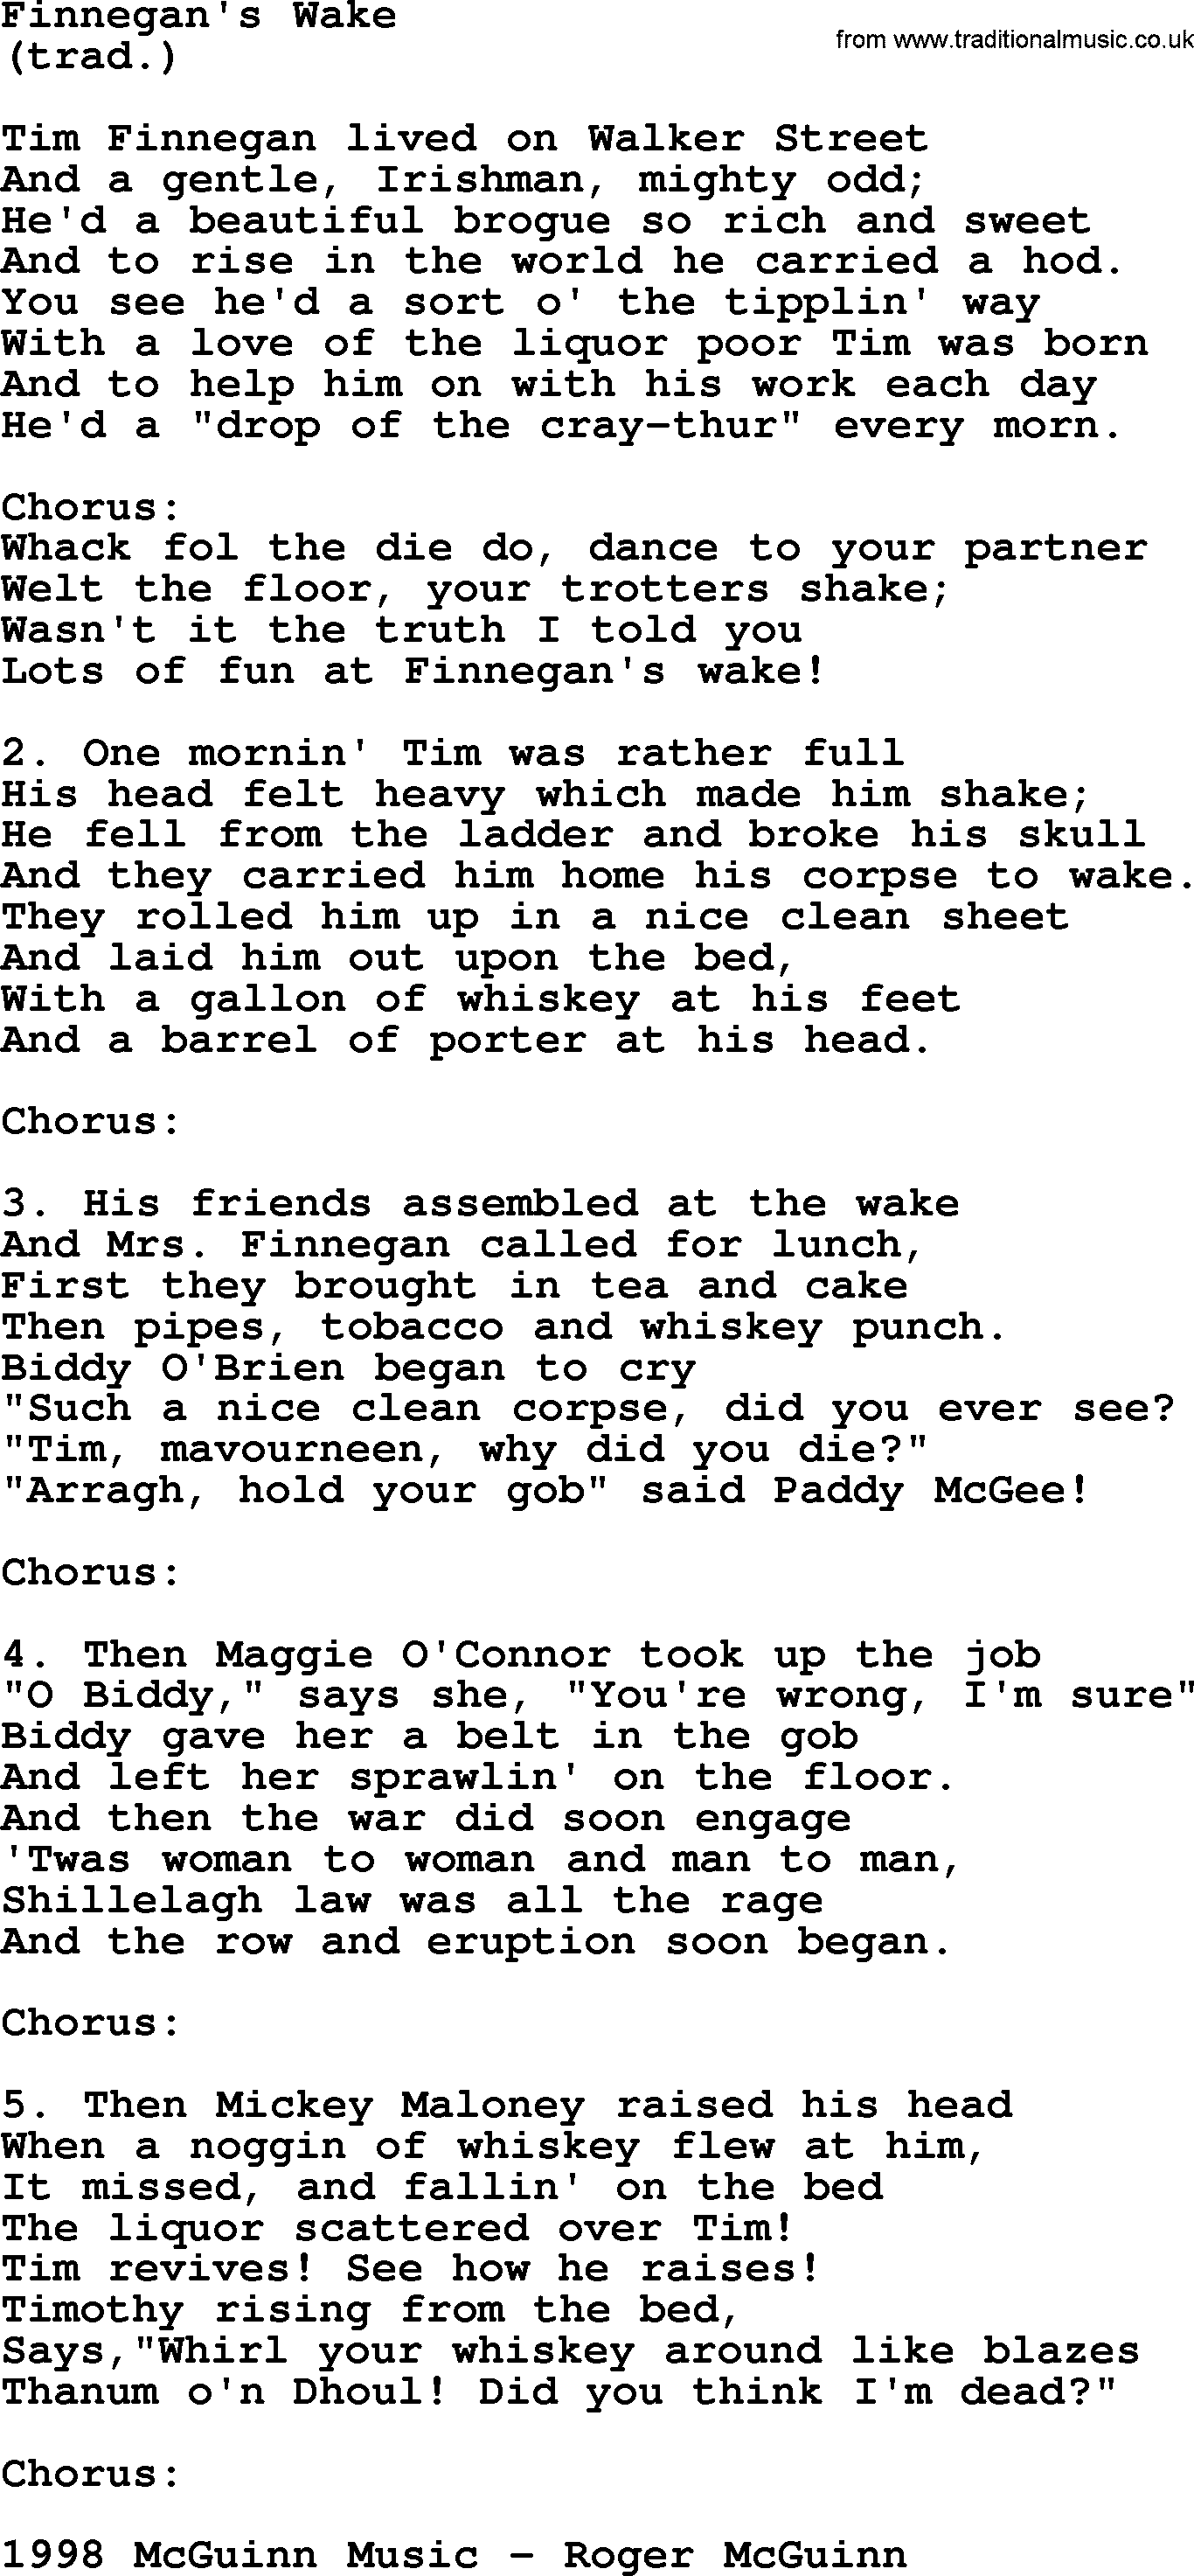 The Byrds song Finnegan's Wake, lyrics